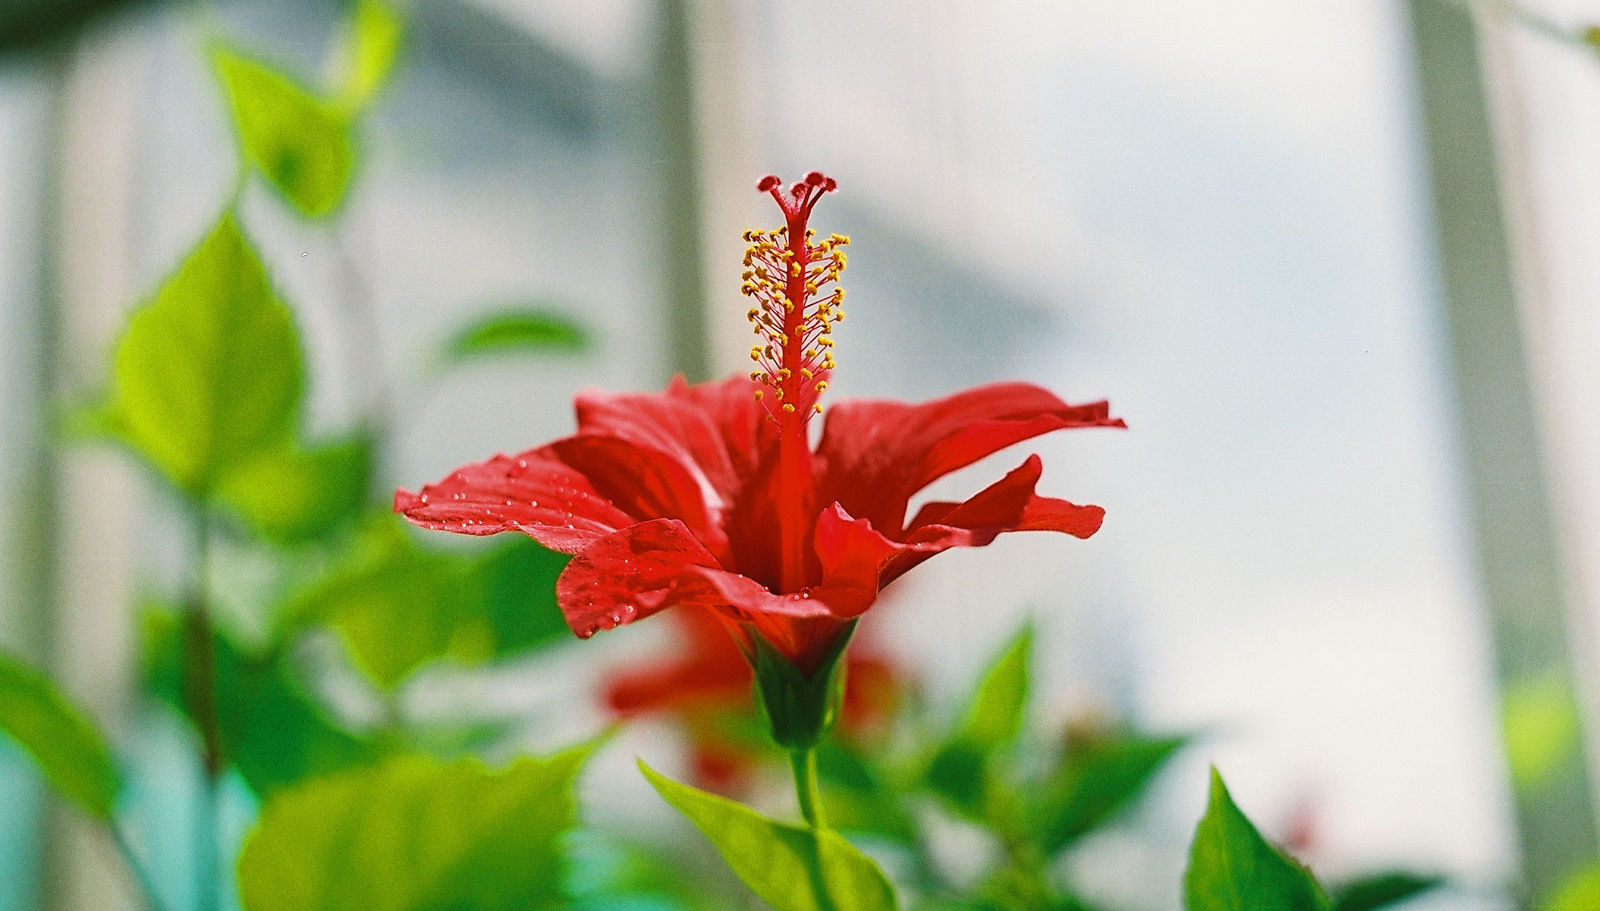 Scarlet flower - My, Flowers, The photo, Plants